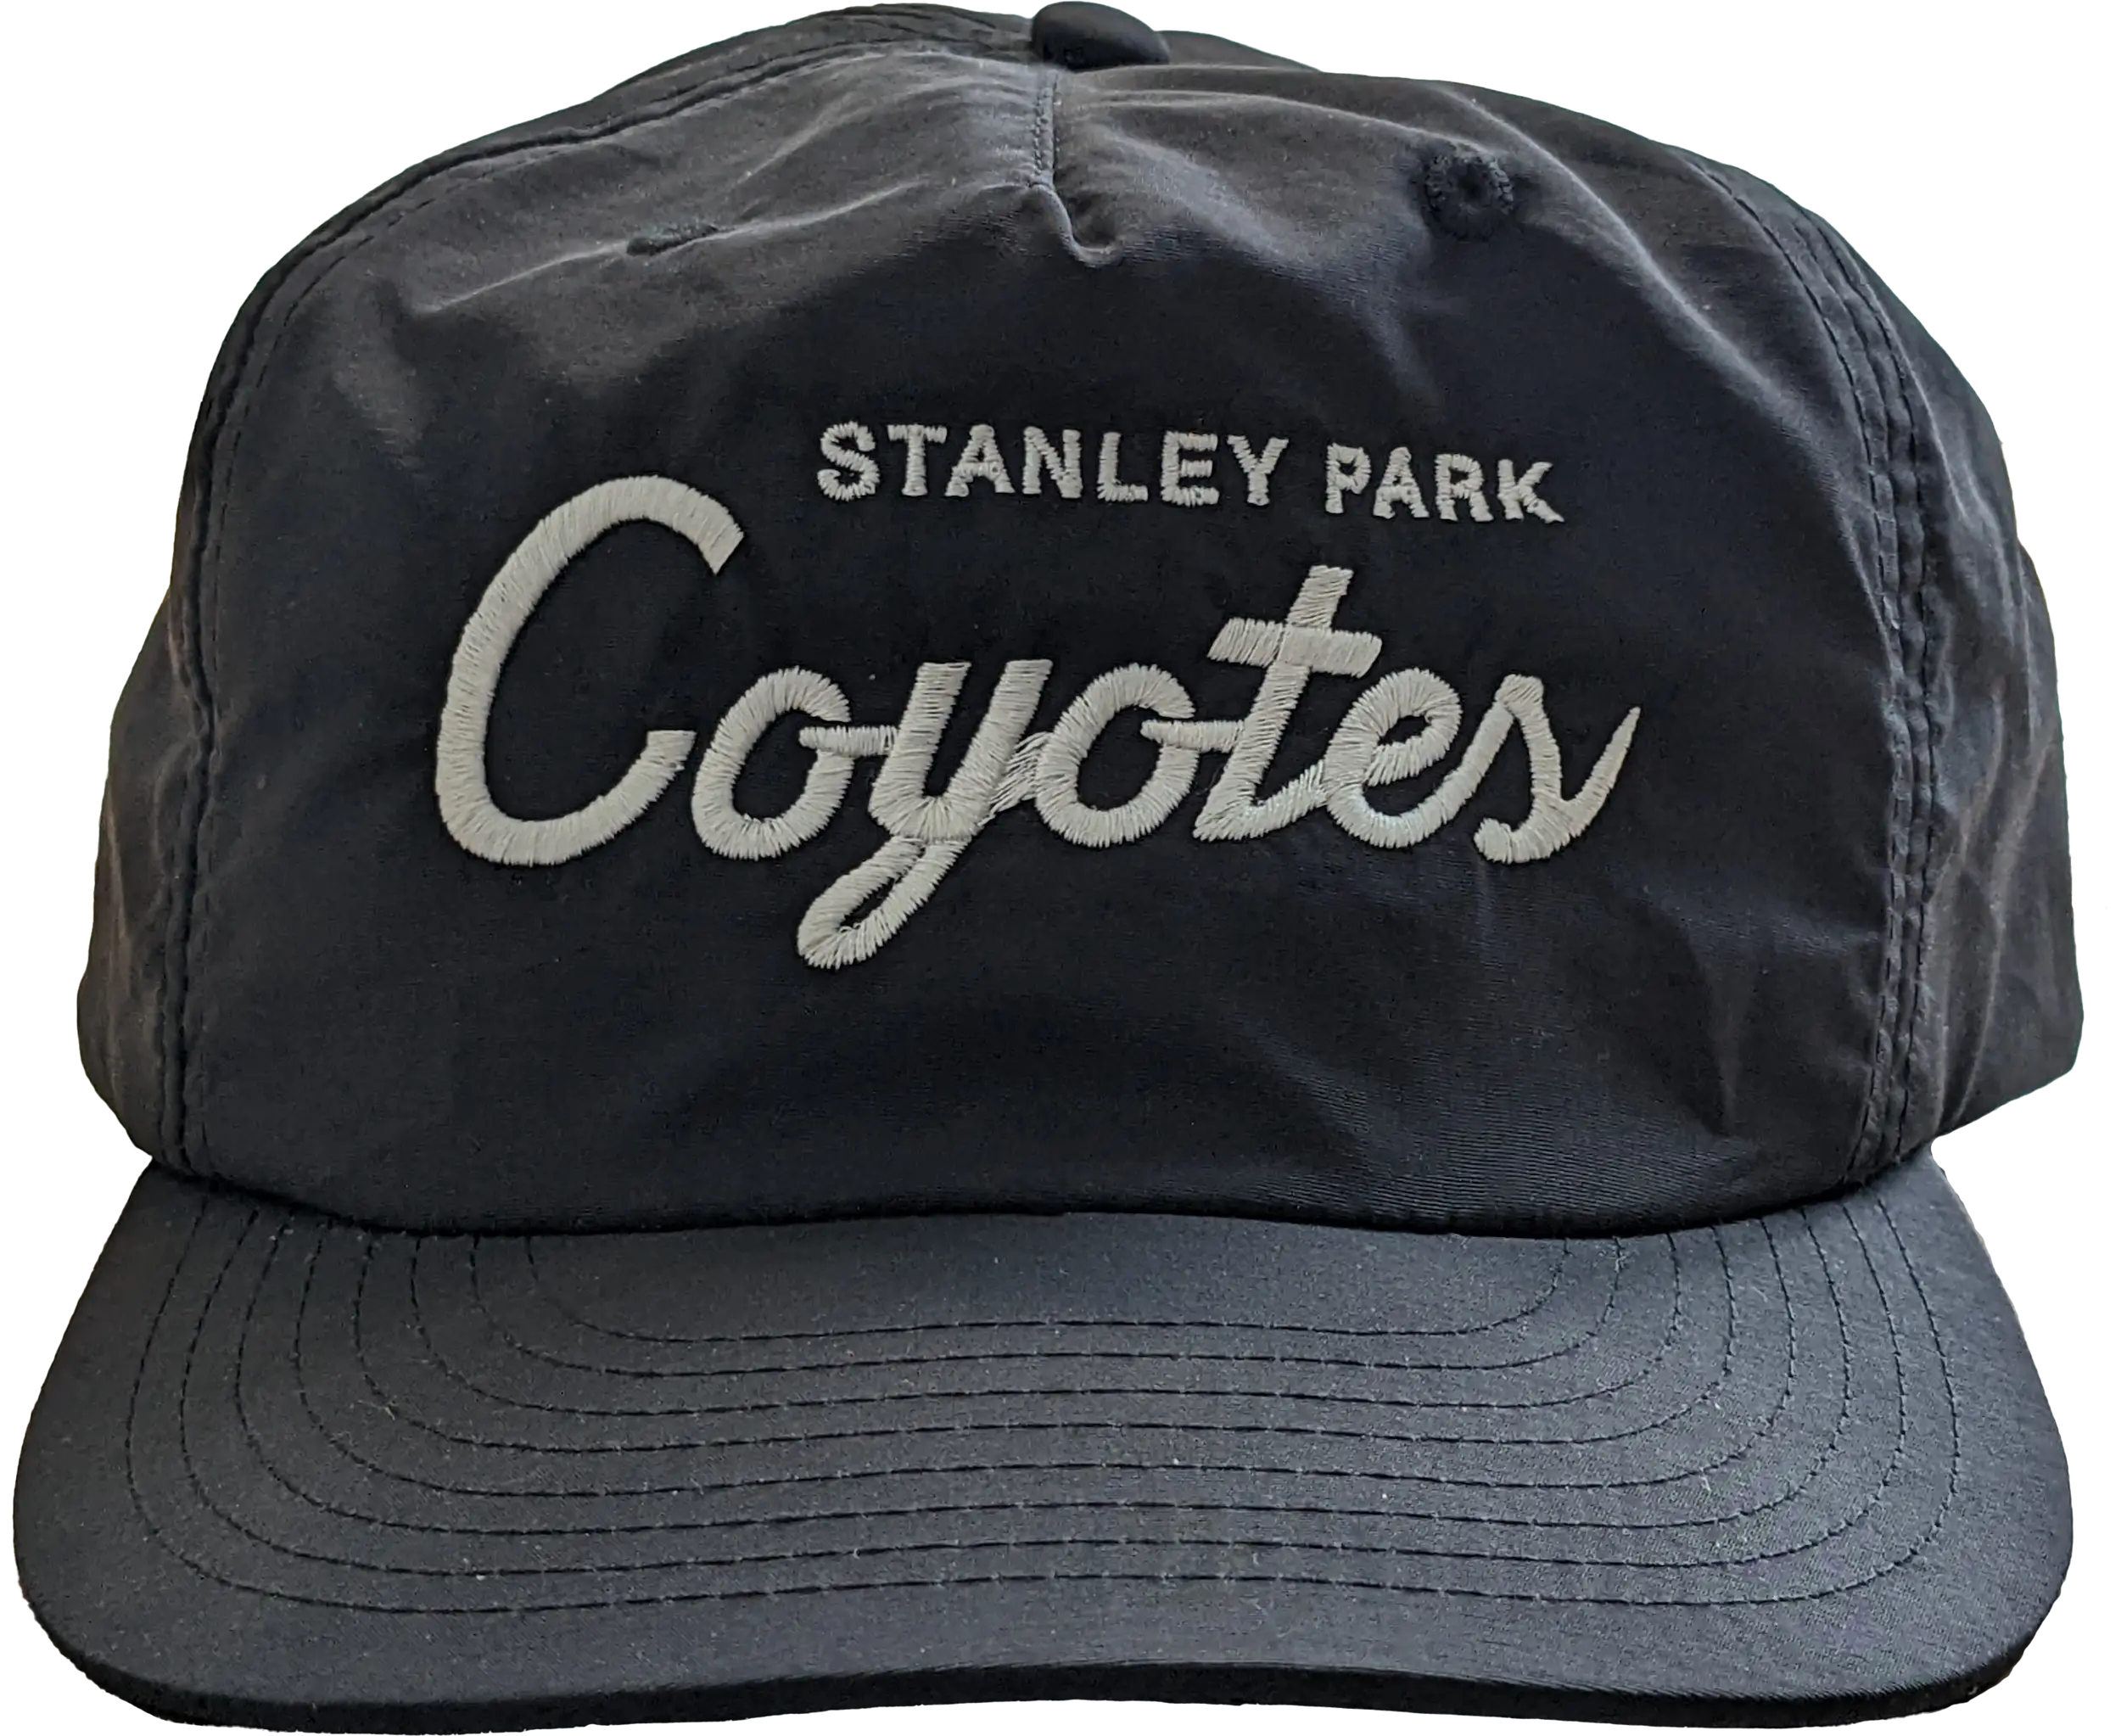 Stanley Park Coyotes Team Hat